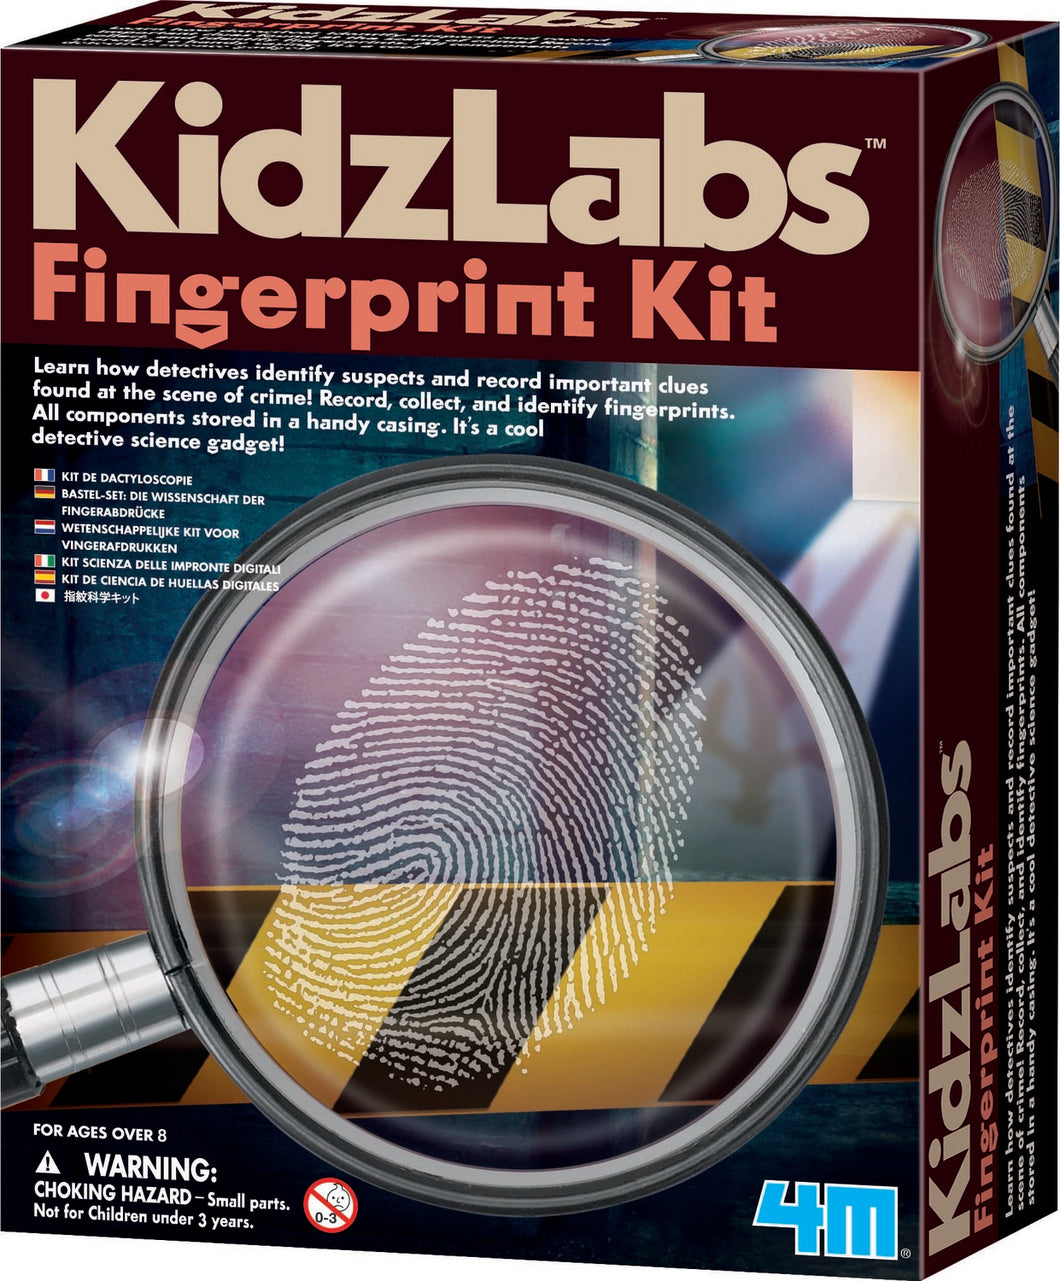 Image of the packaging for the Fingerprint Kit by KidzLabs.